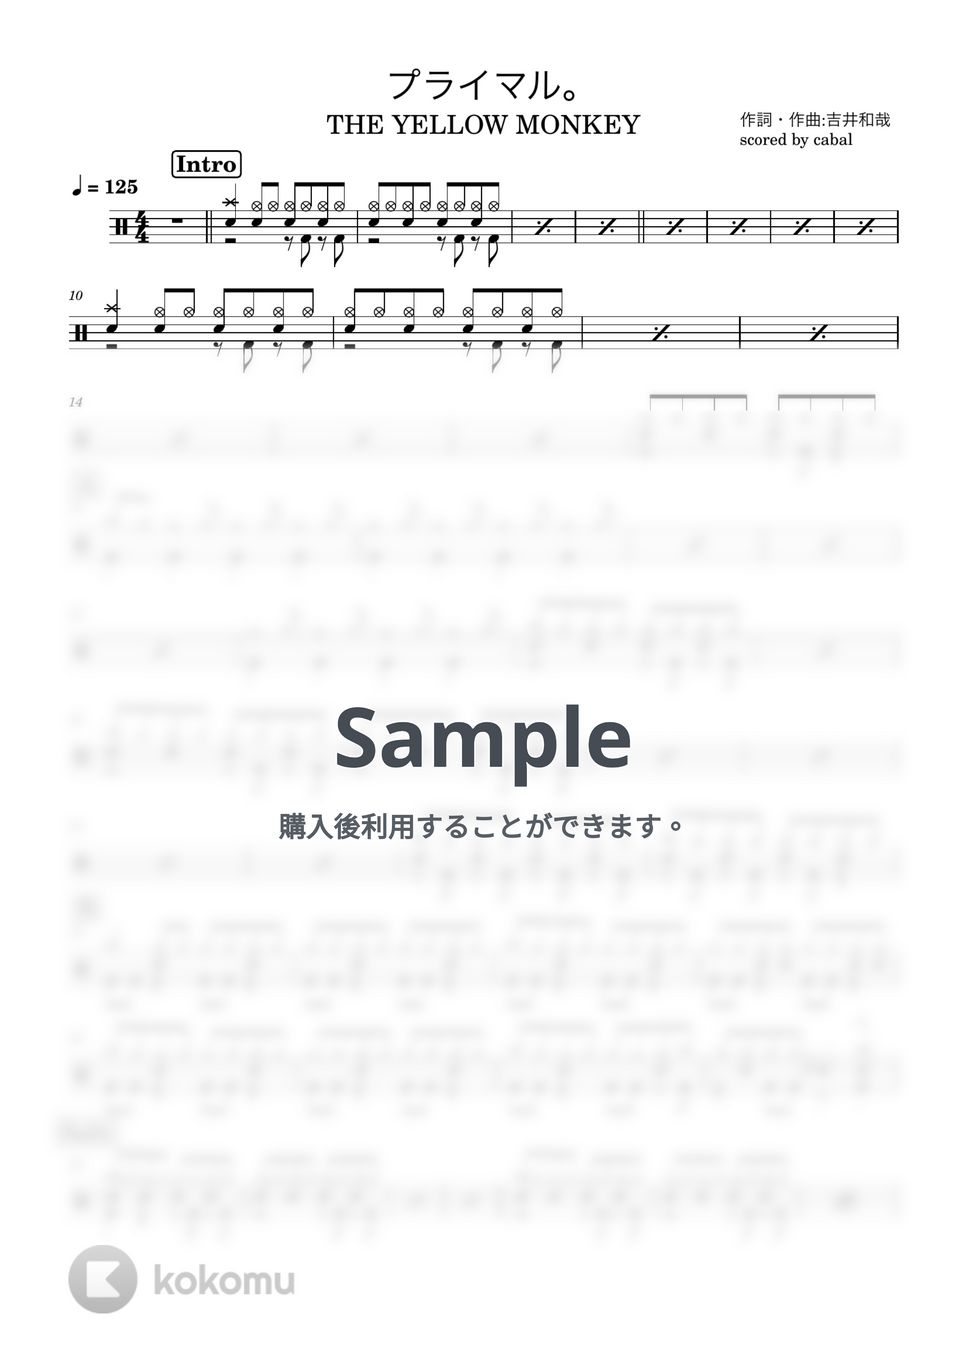 THE YELLOW MONKEY - プライマル。 (ドラム譜面) by cabal